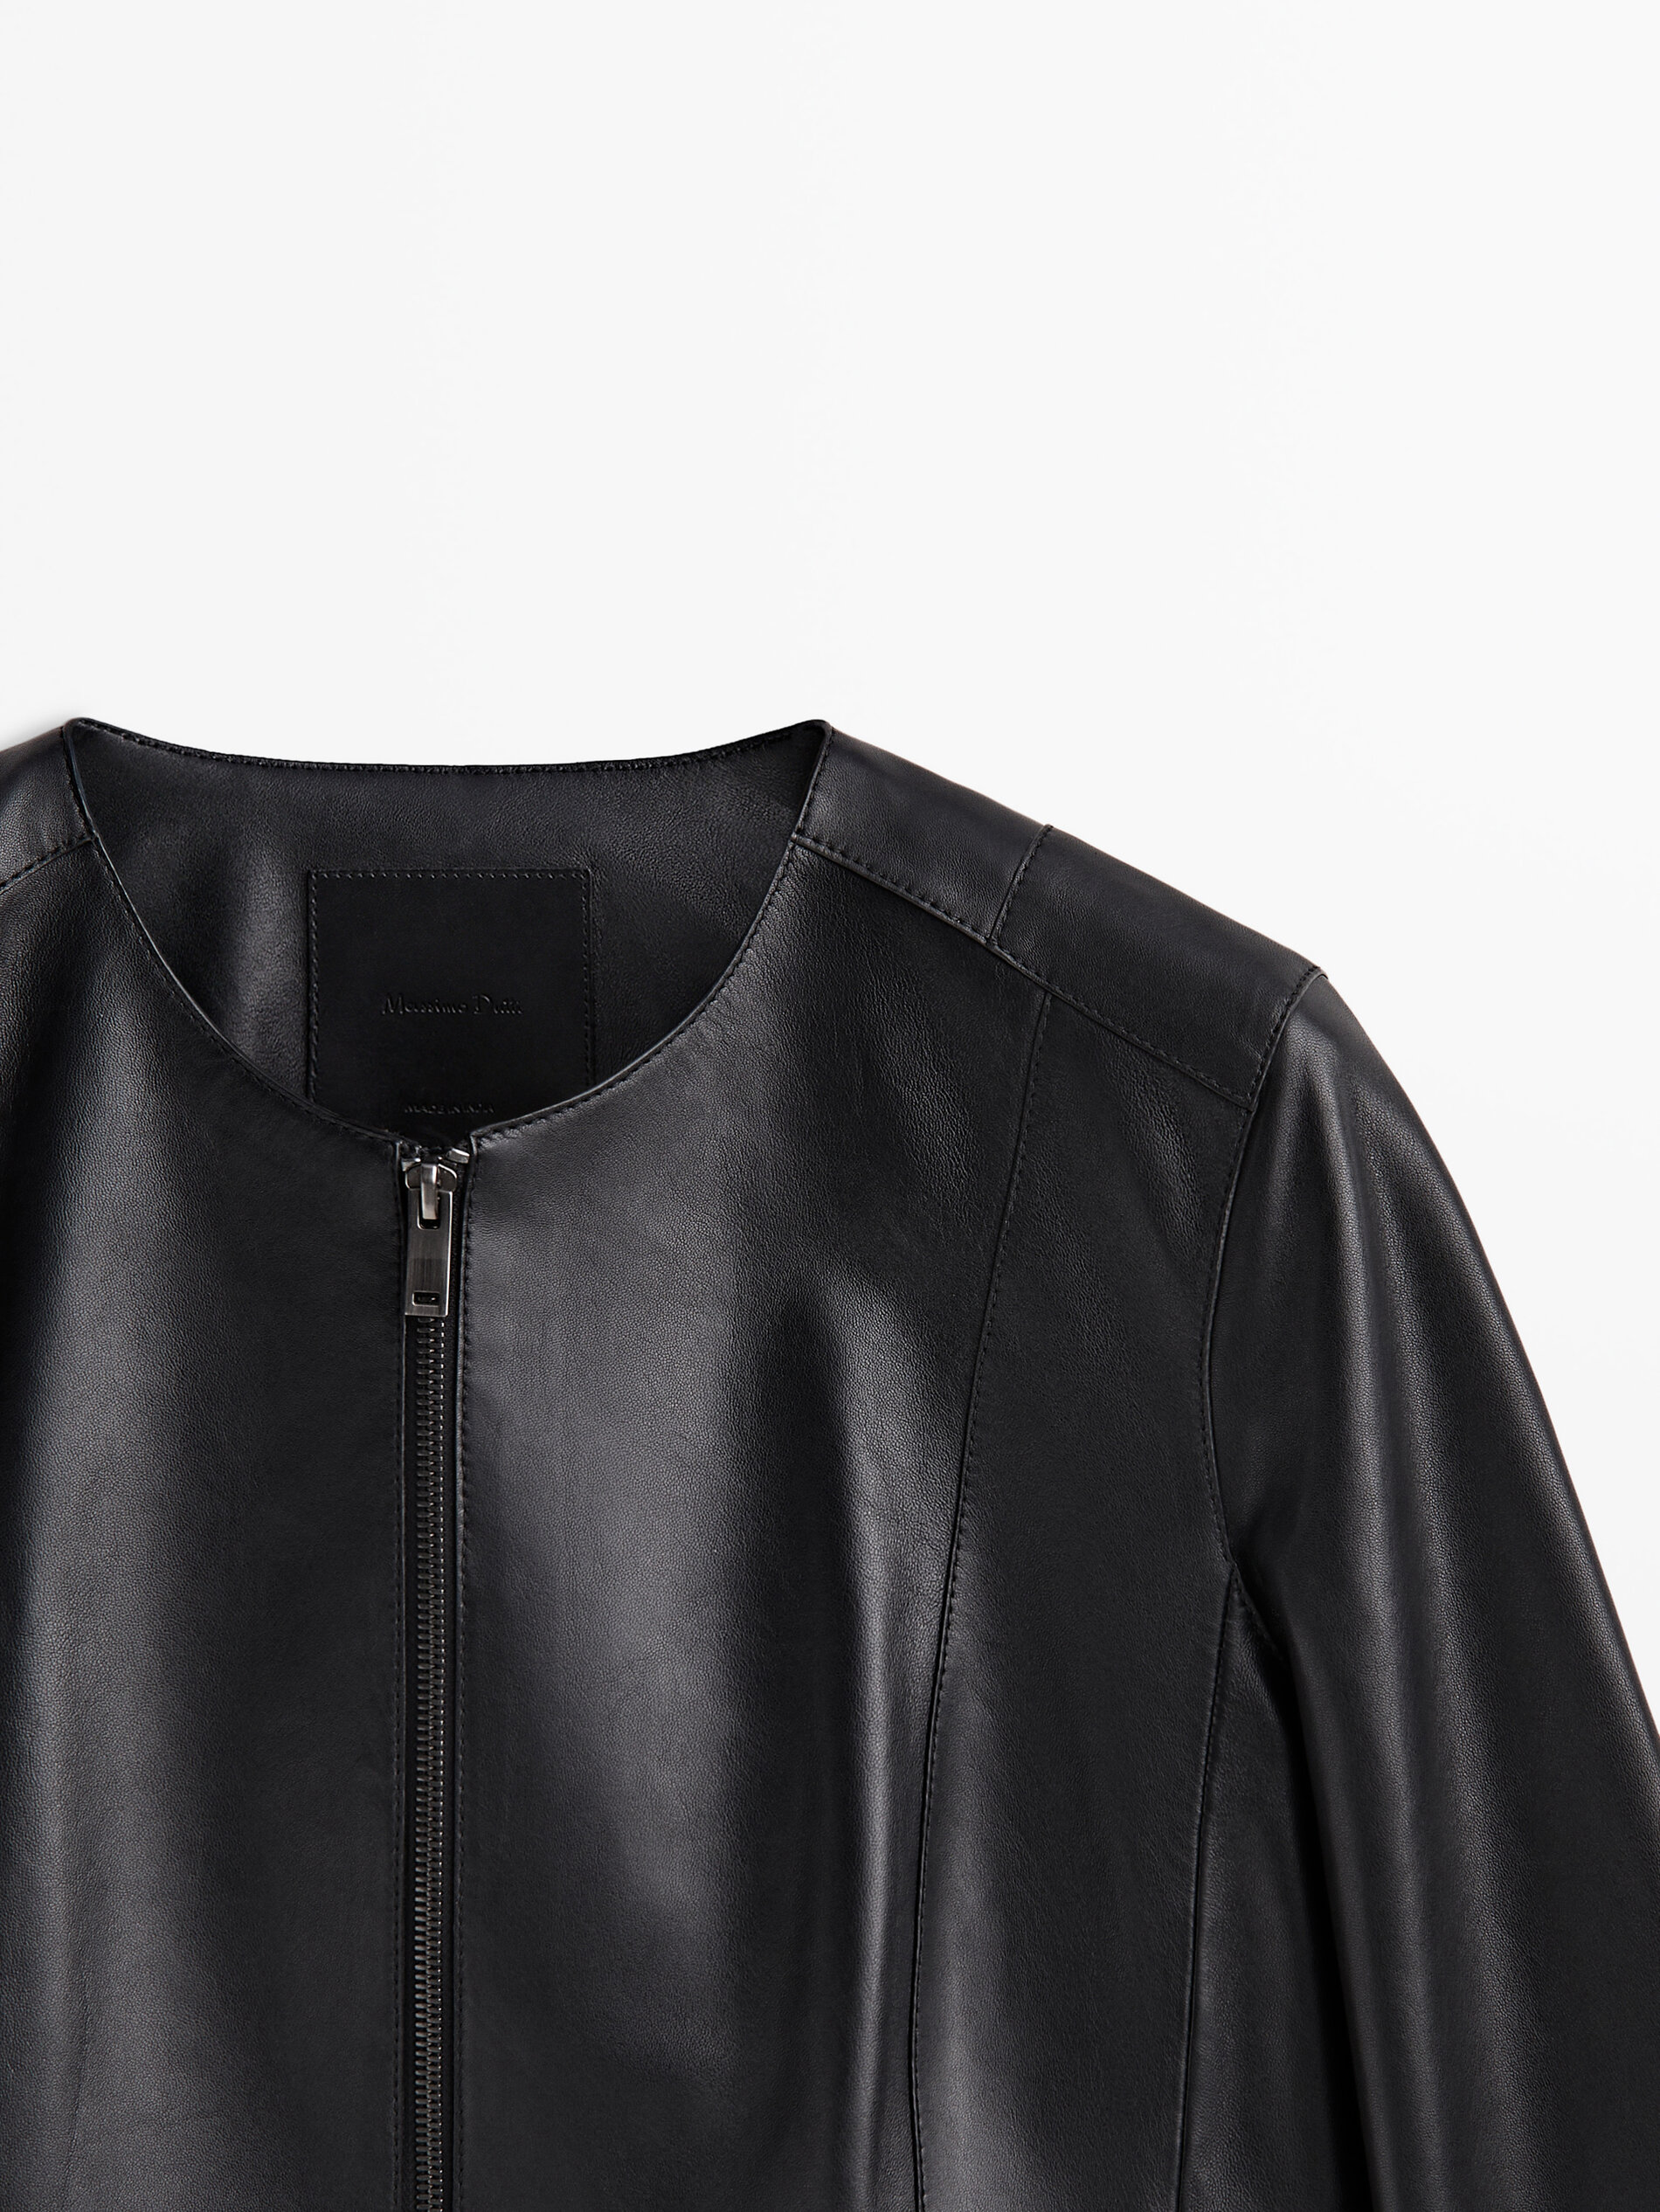 Black nappa leather jacket - Massimo Dutti United States of America